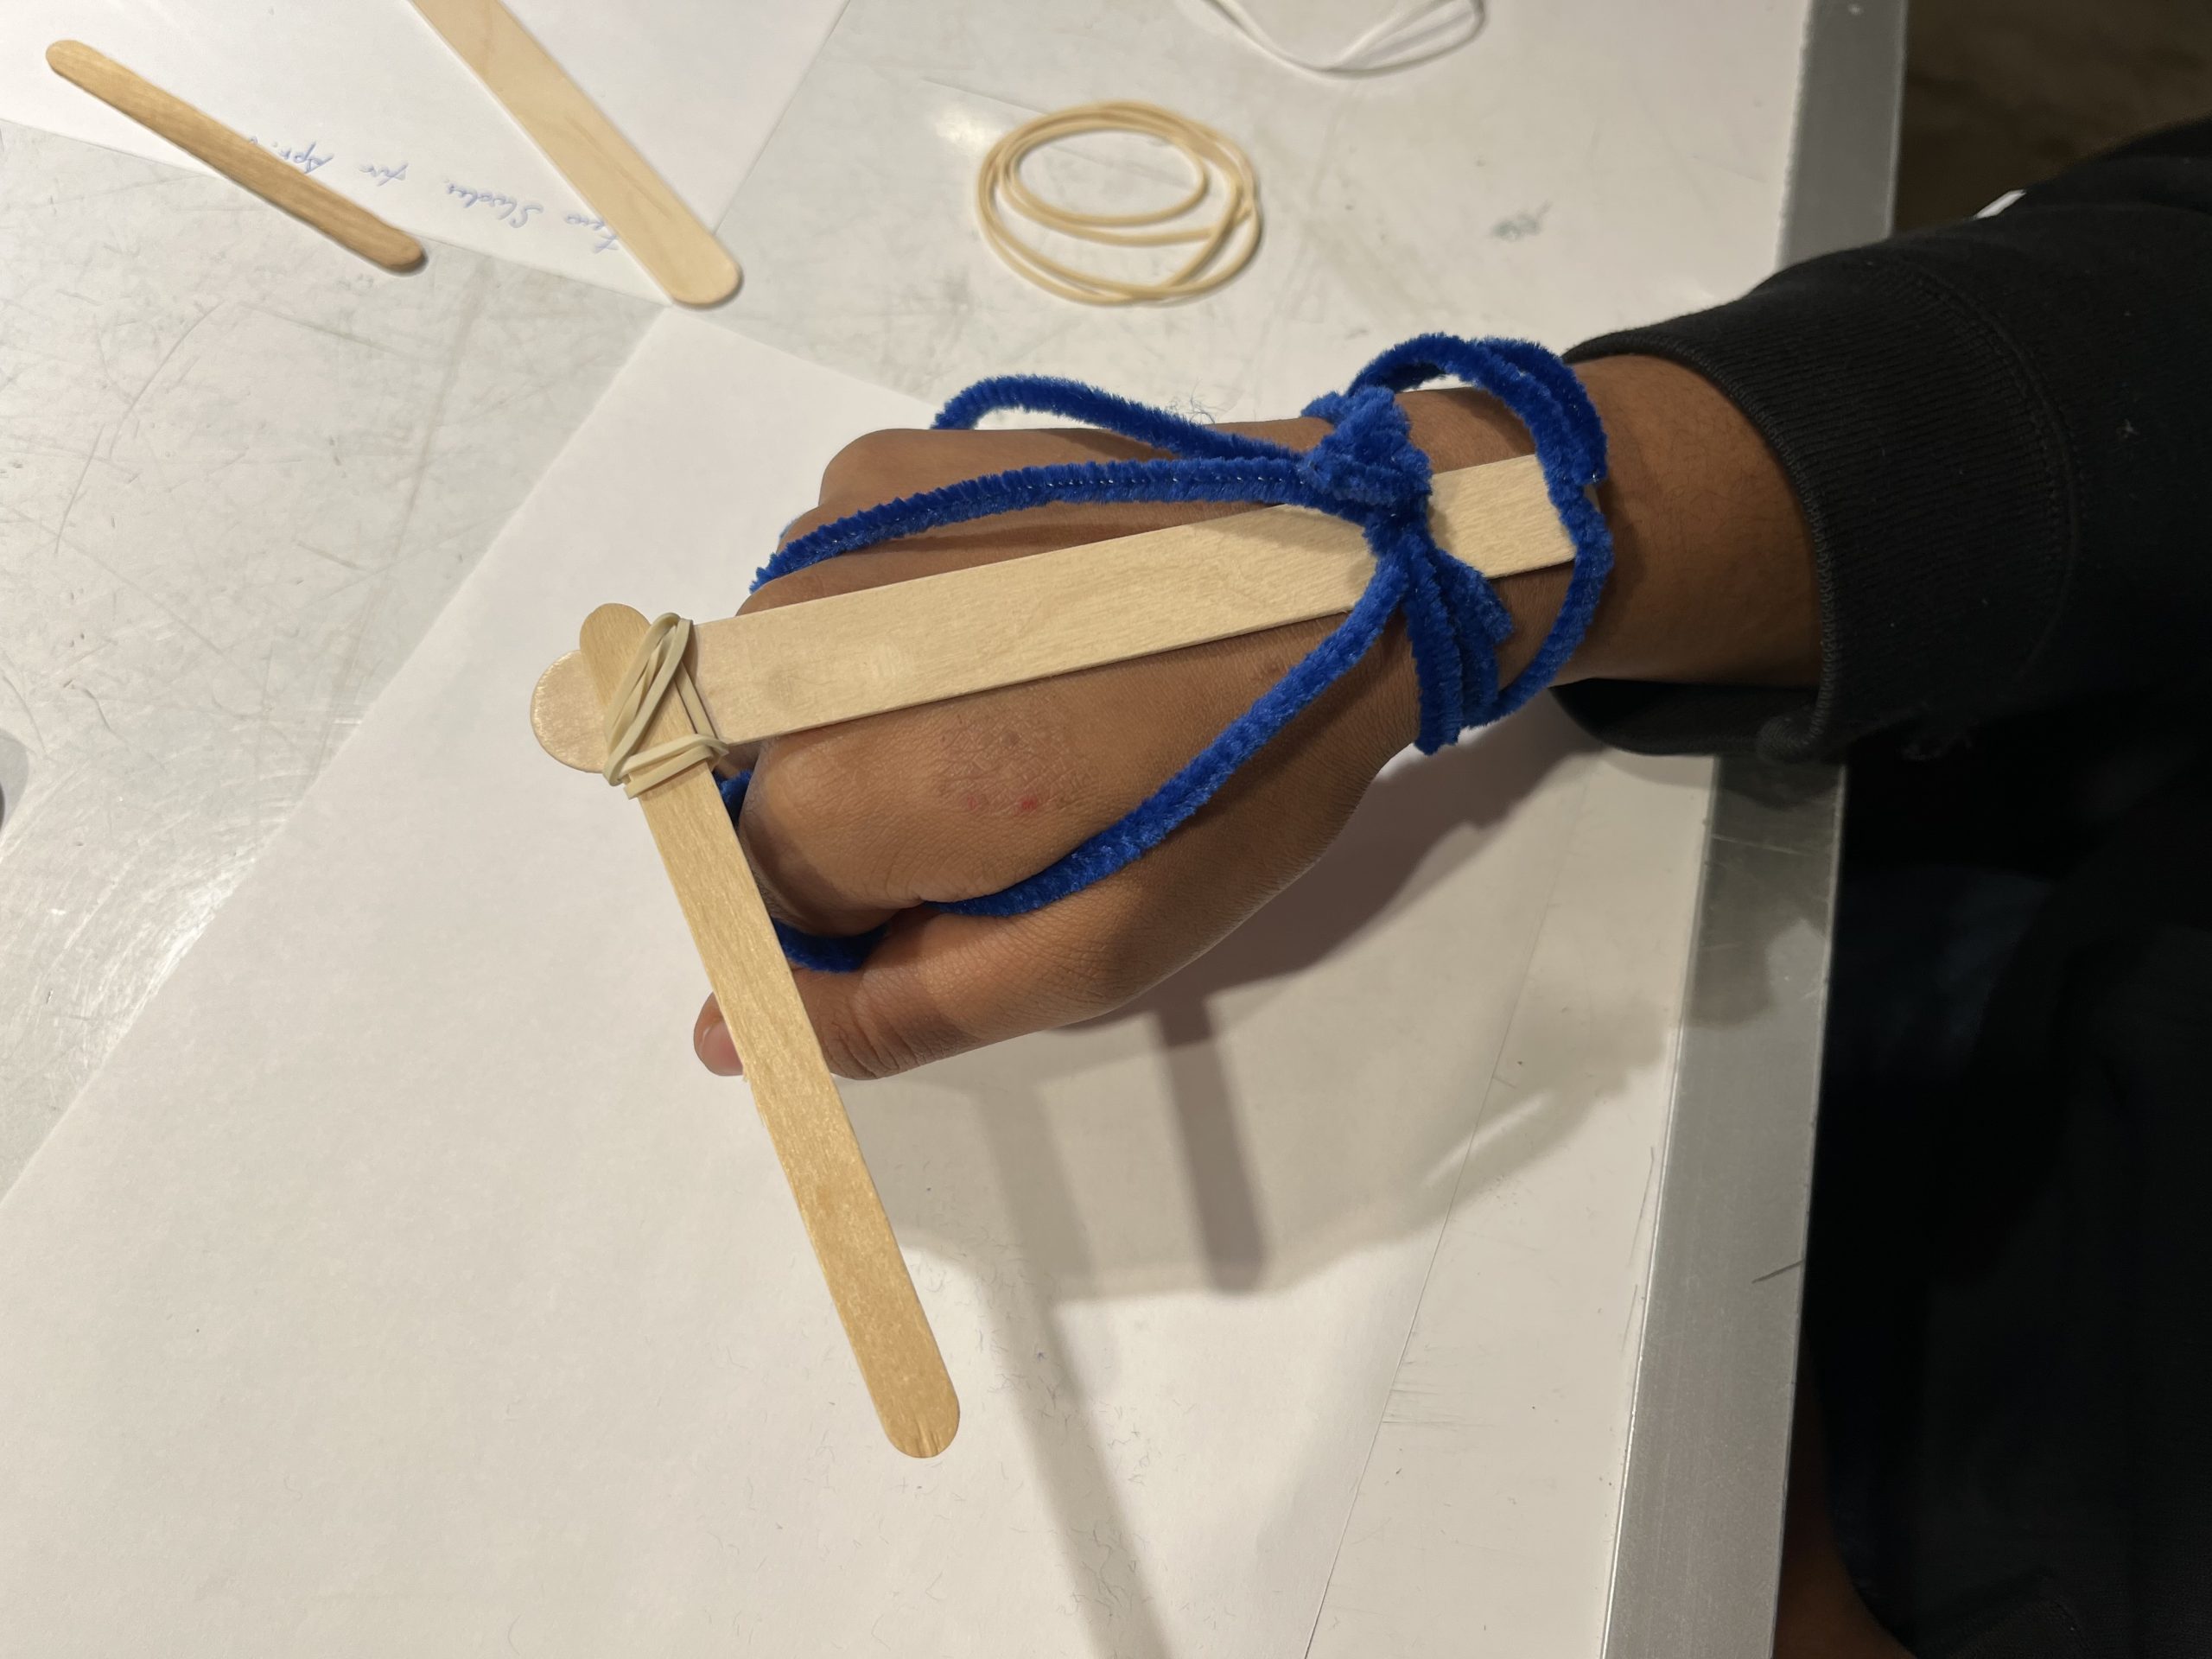 a prototype of wrist band